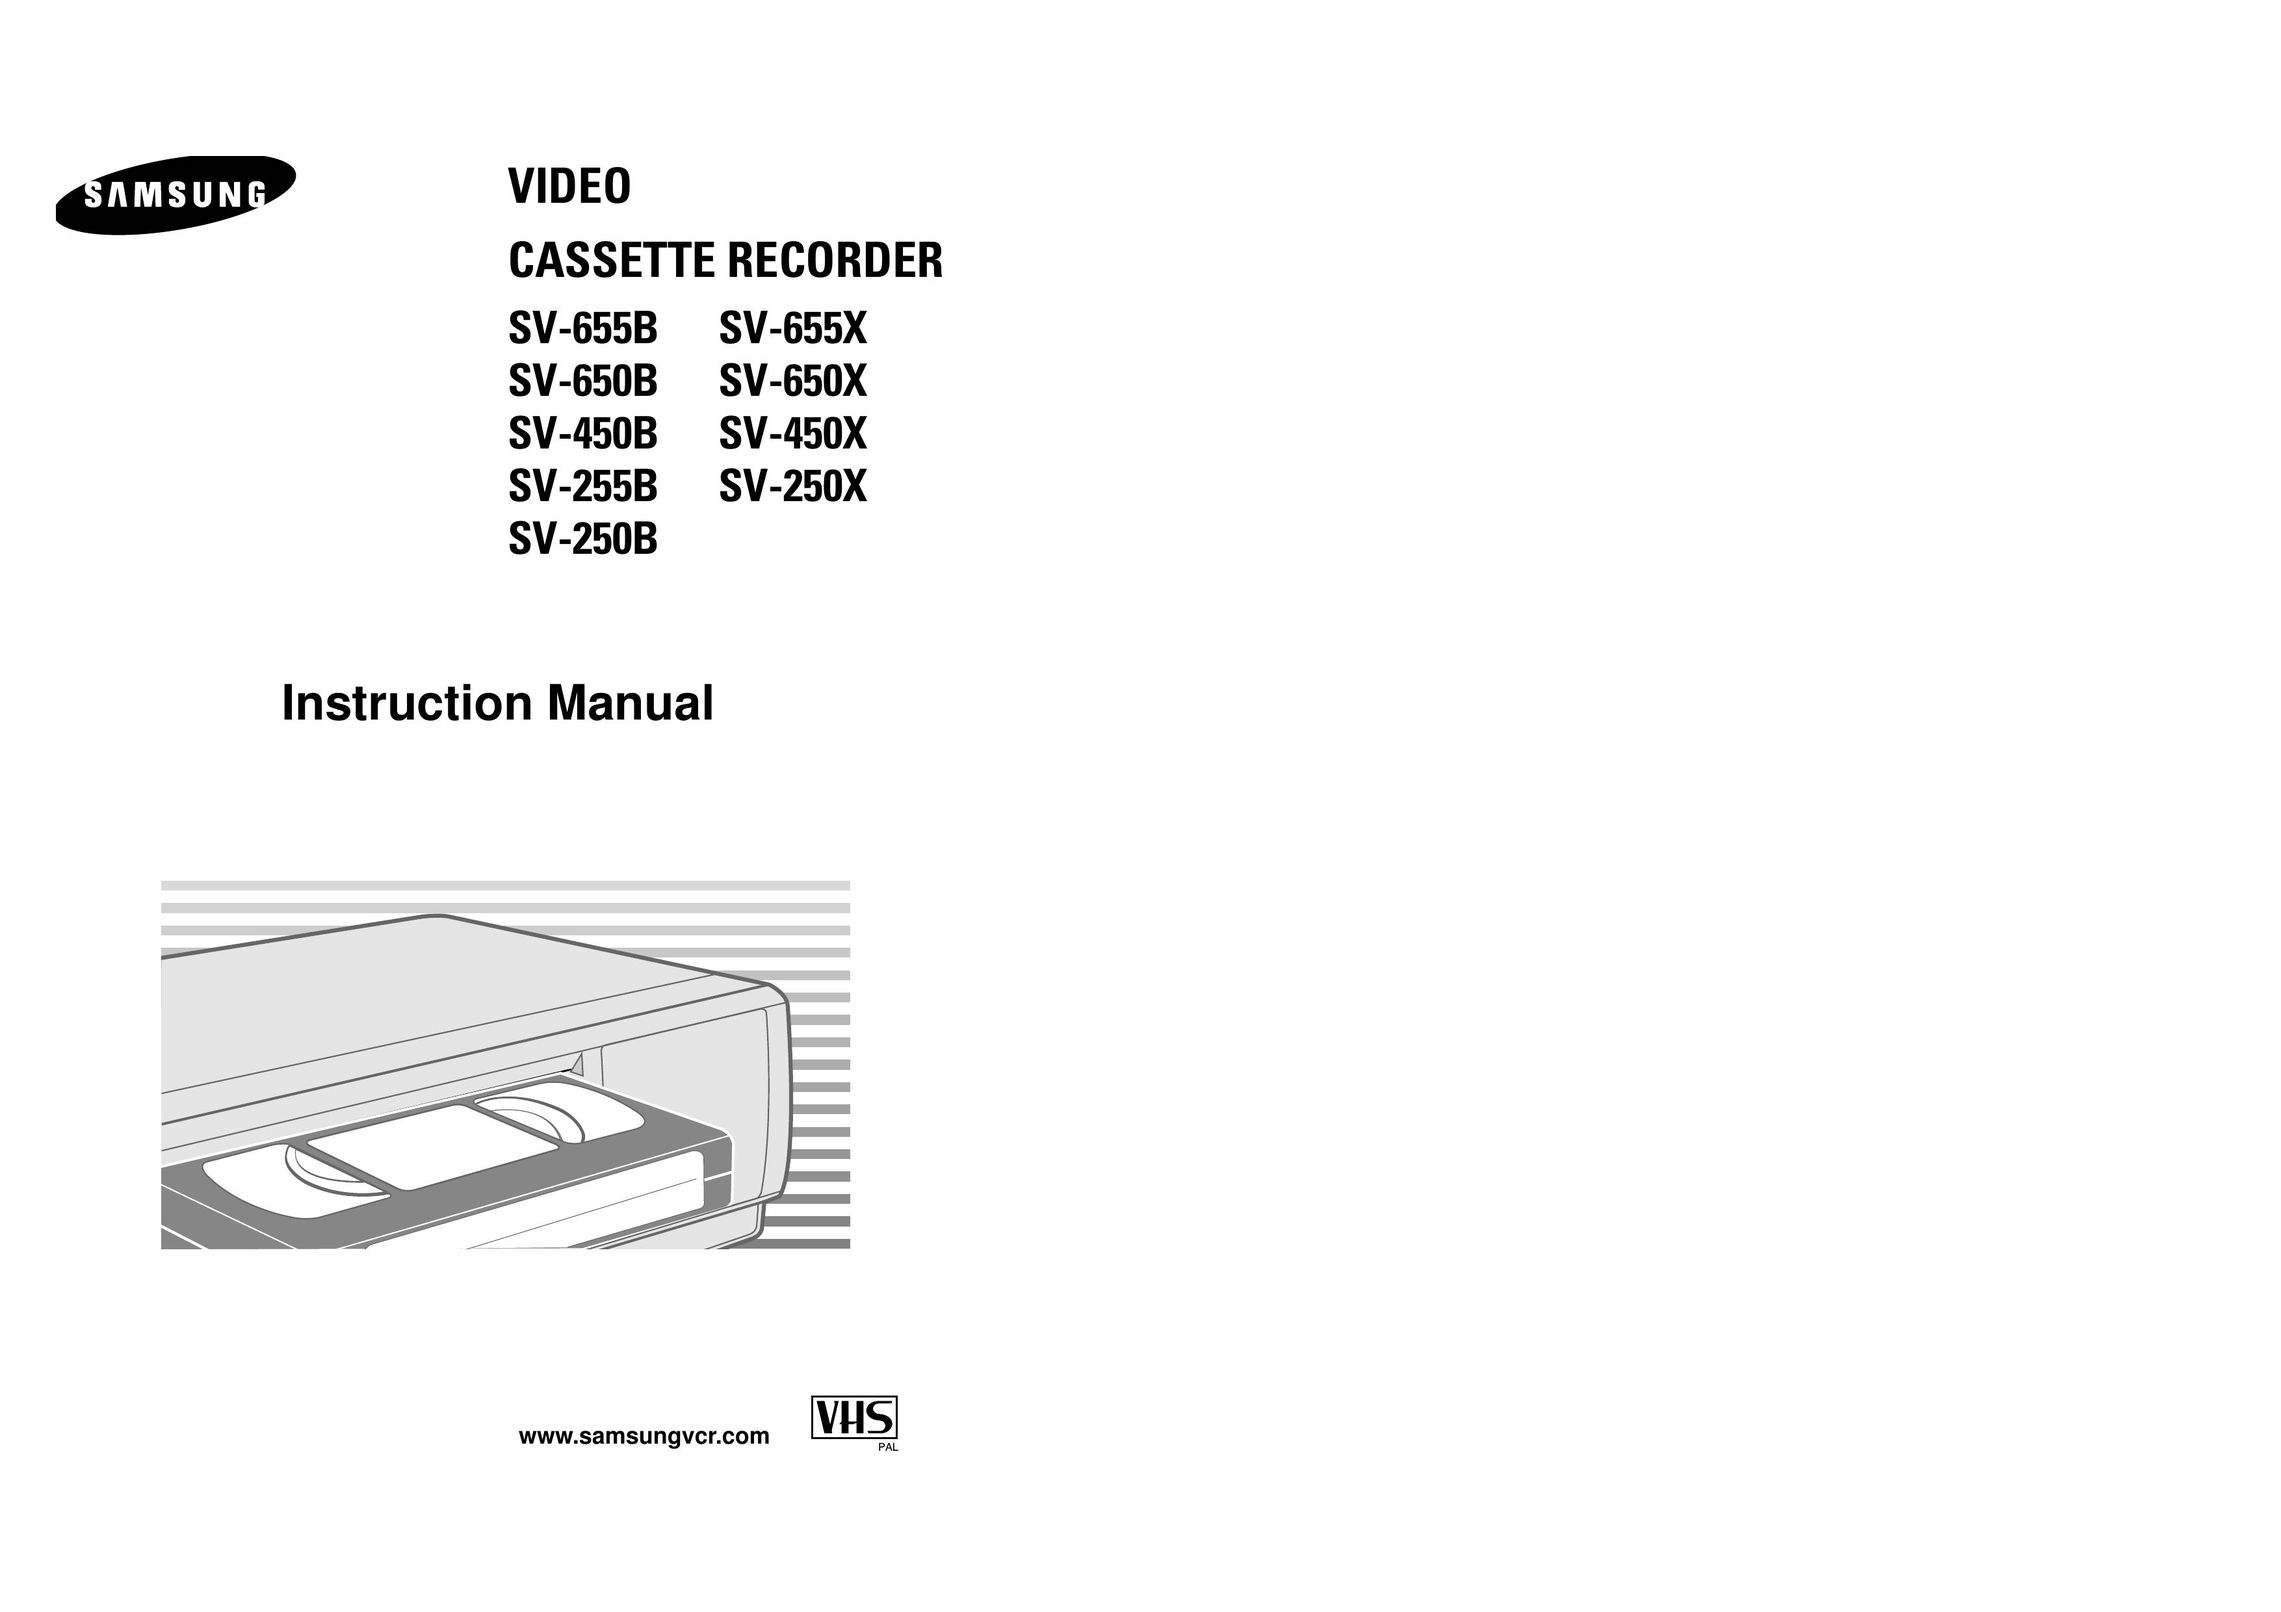 Samsung SV-450X VCR User Manual